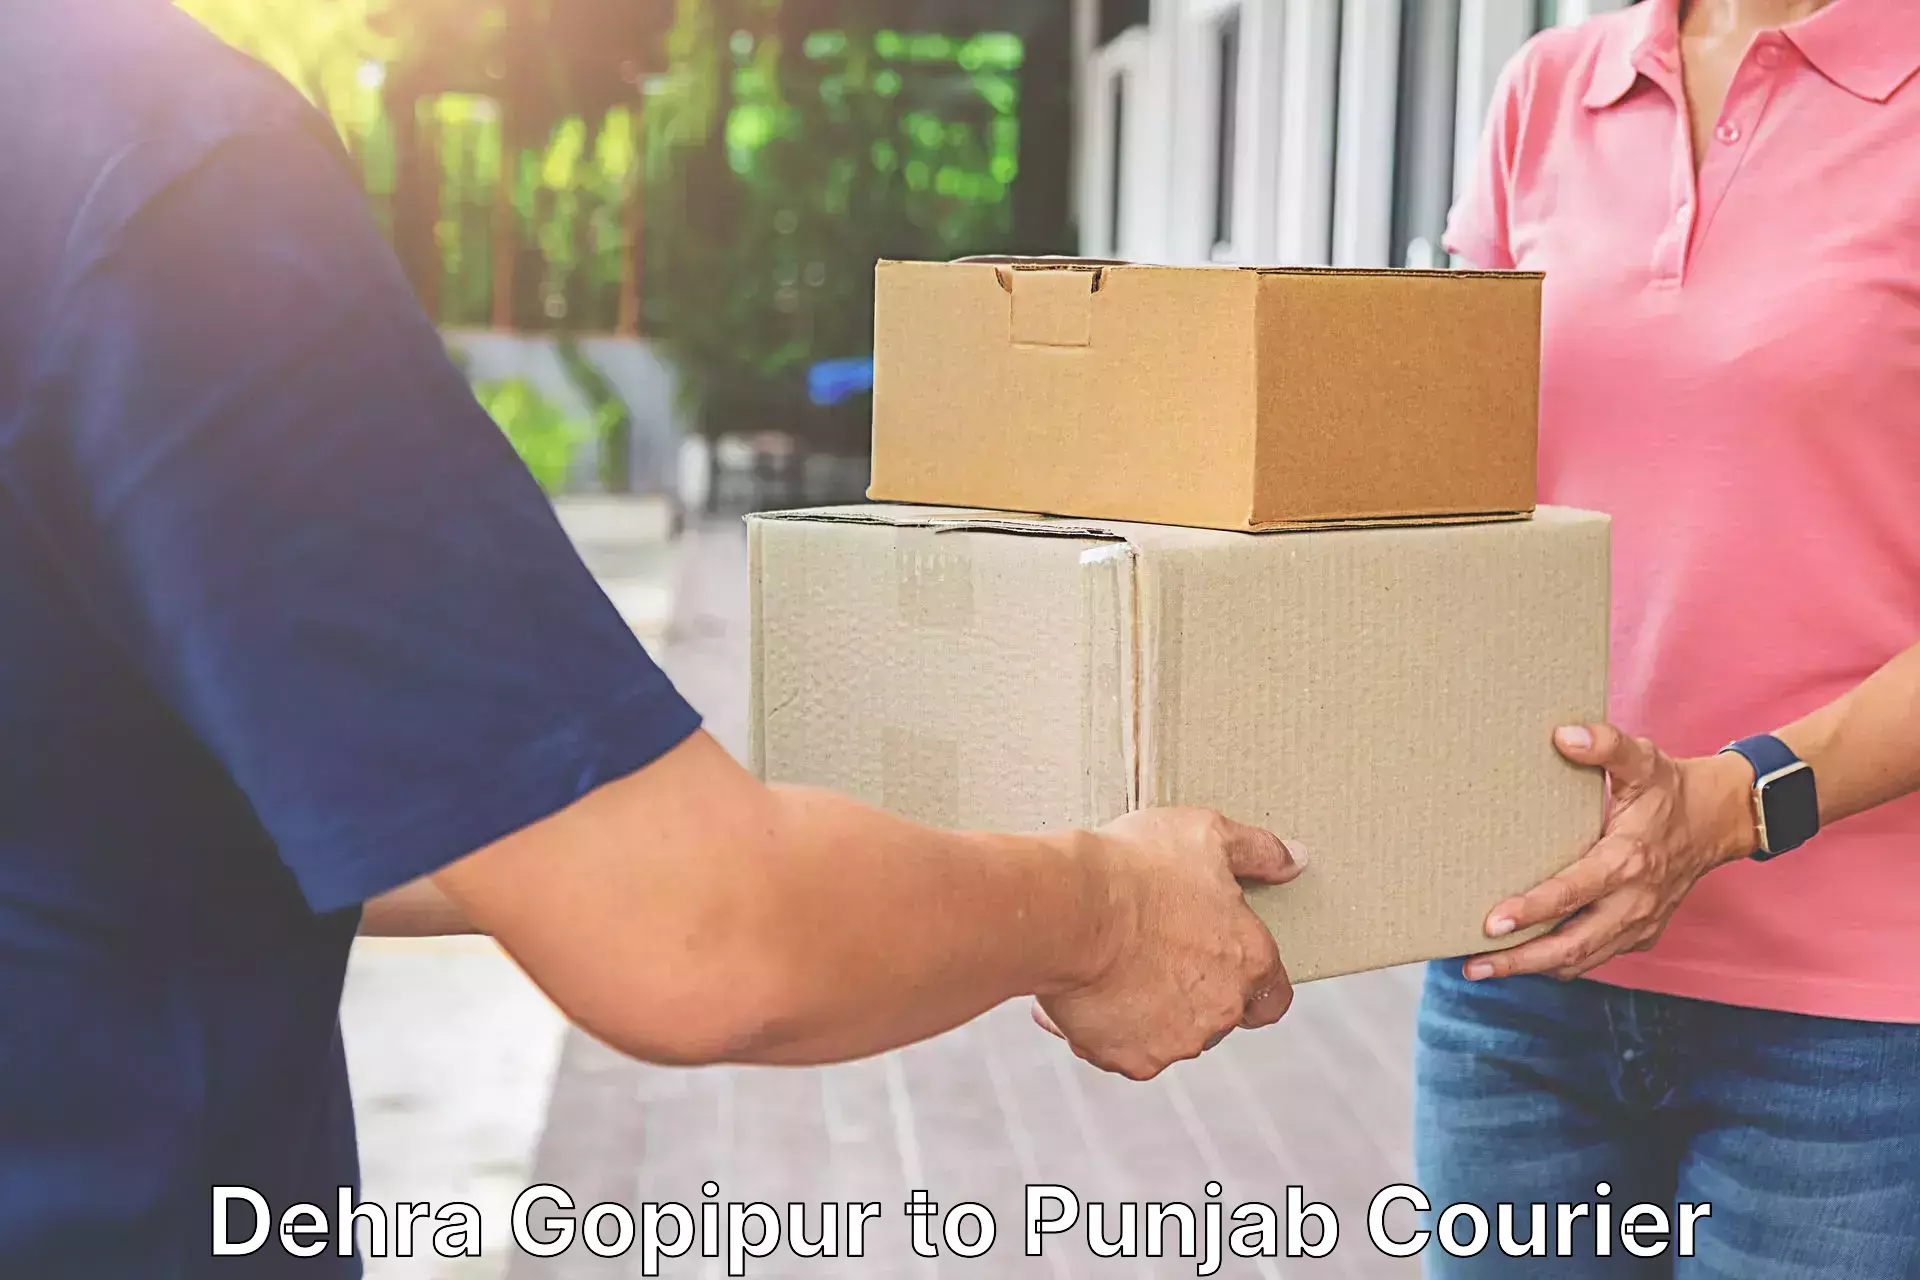 Courier service partnerships Dehra Gopipur to Punjab